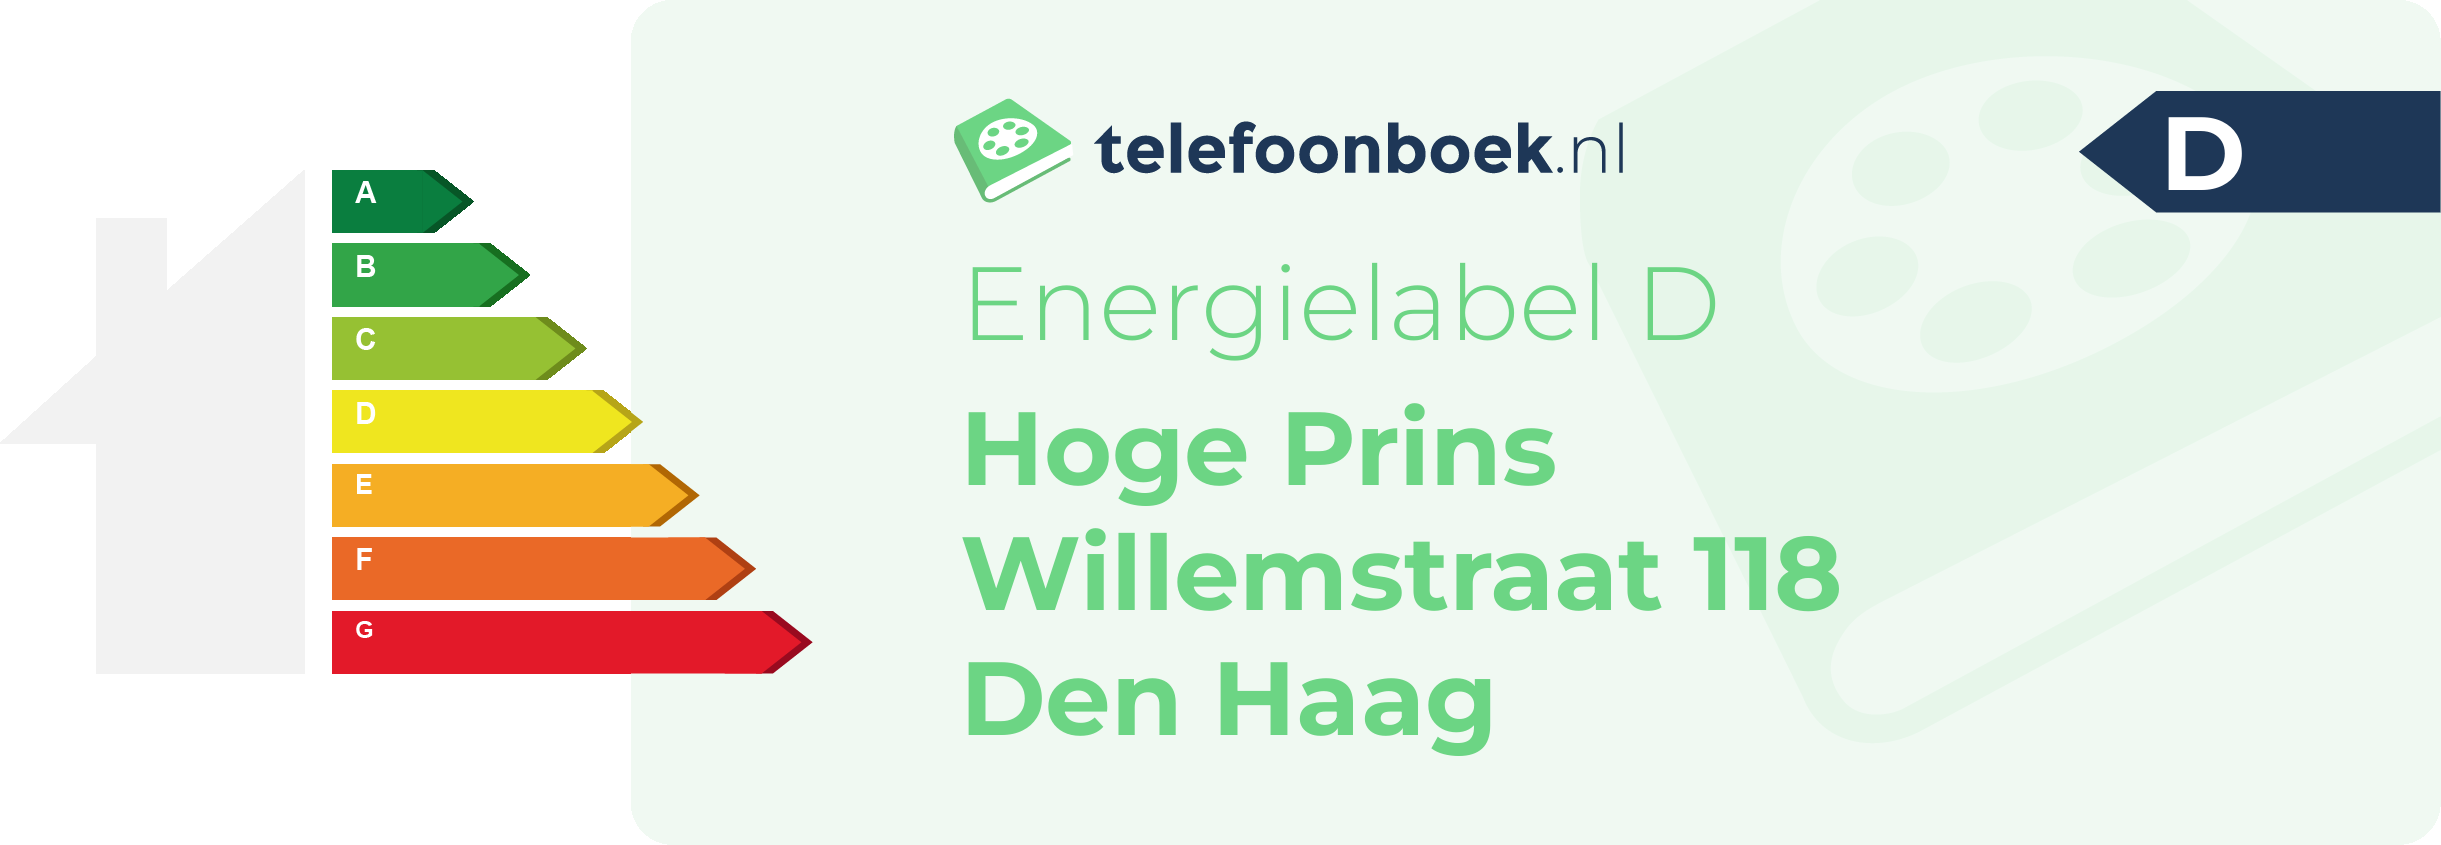 Energielabel Hoge Prins Willemstraat 118 Den Haag